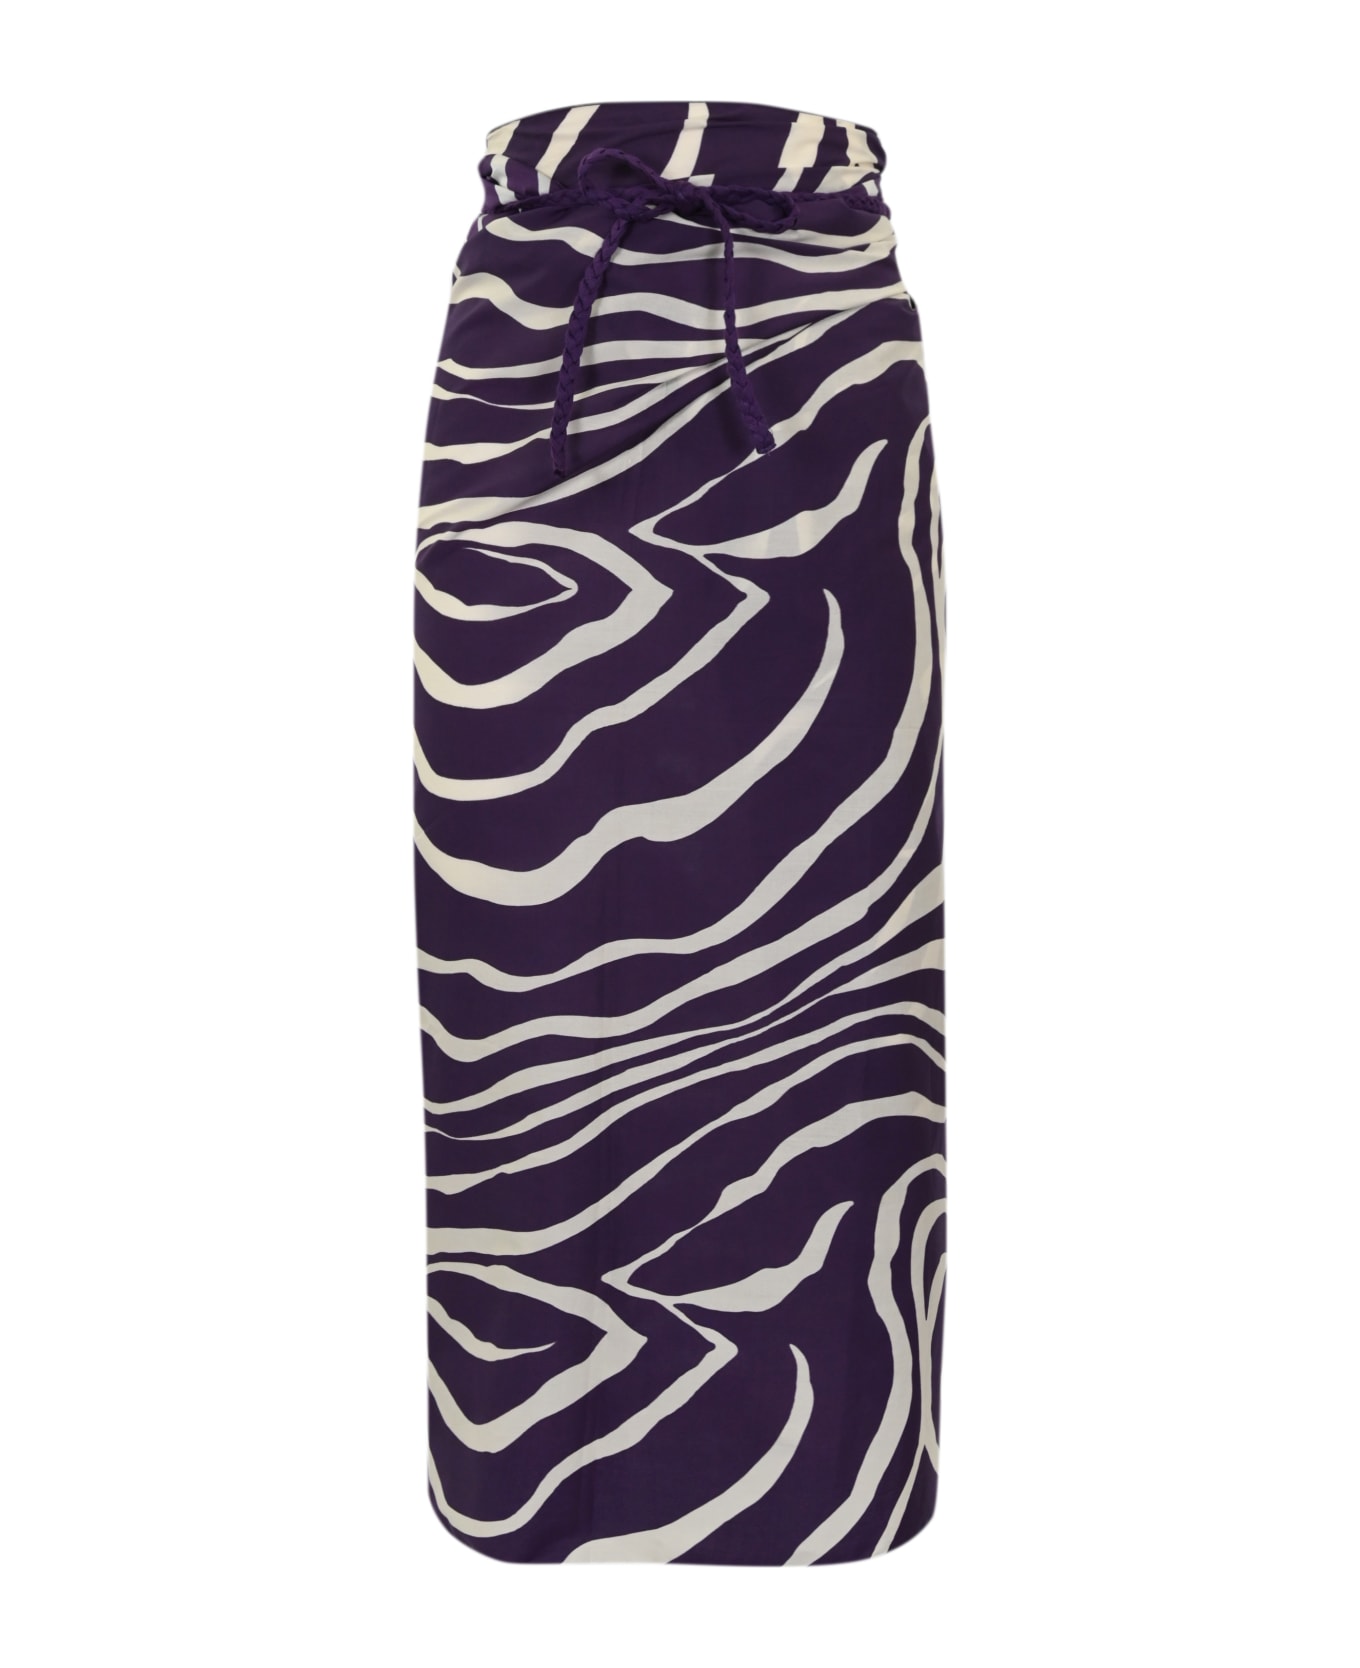 Liviana Conti Zebra Sarong Skirt - Venatura bacca